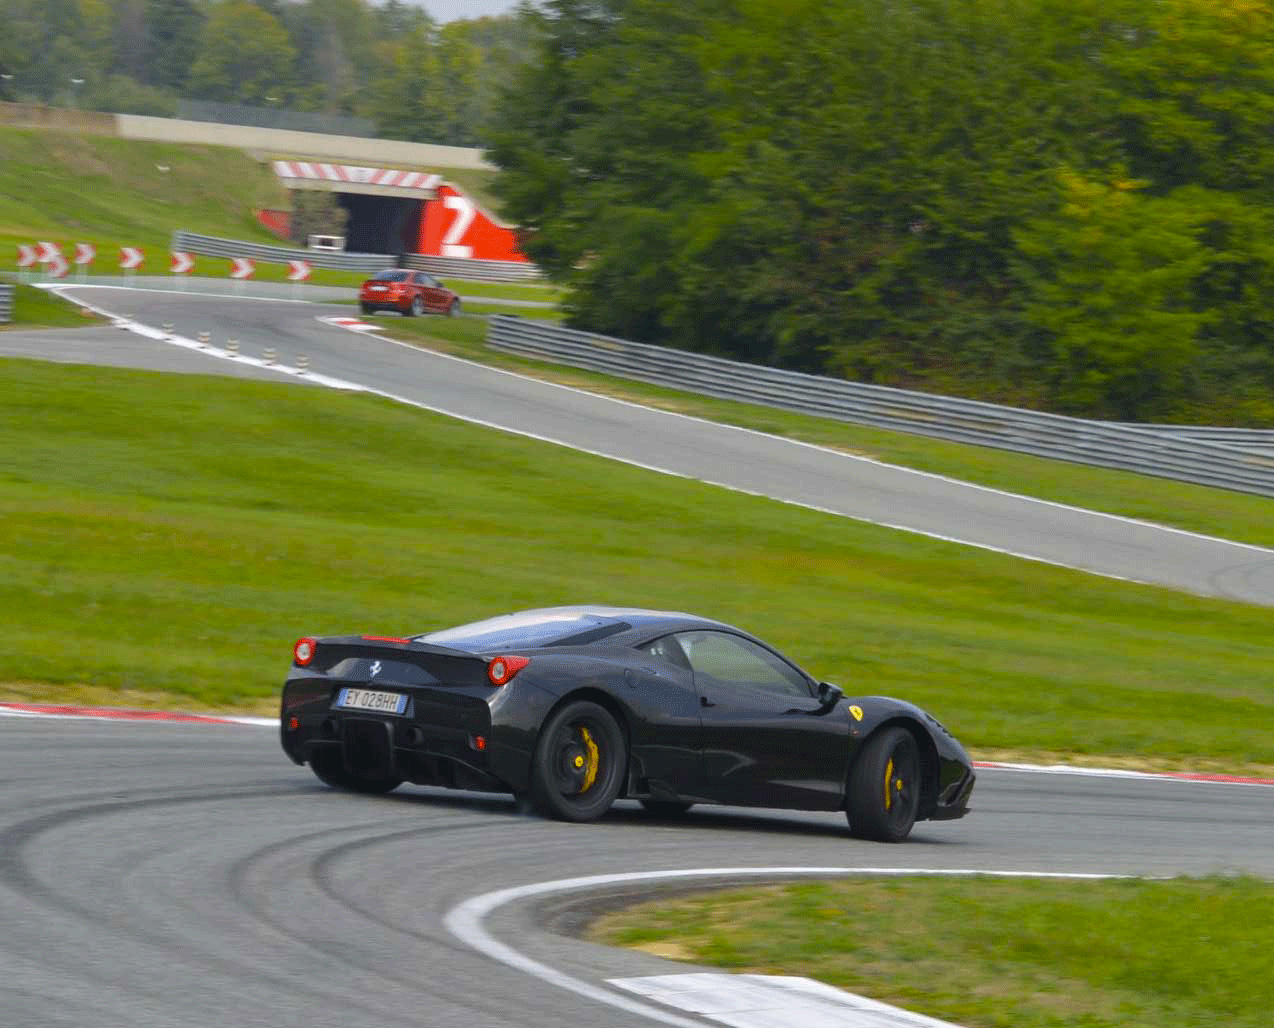 Photo of a Ferrari car on the track